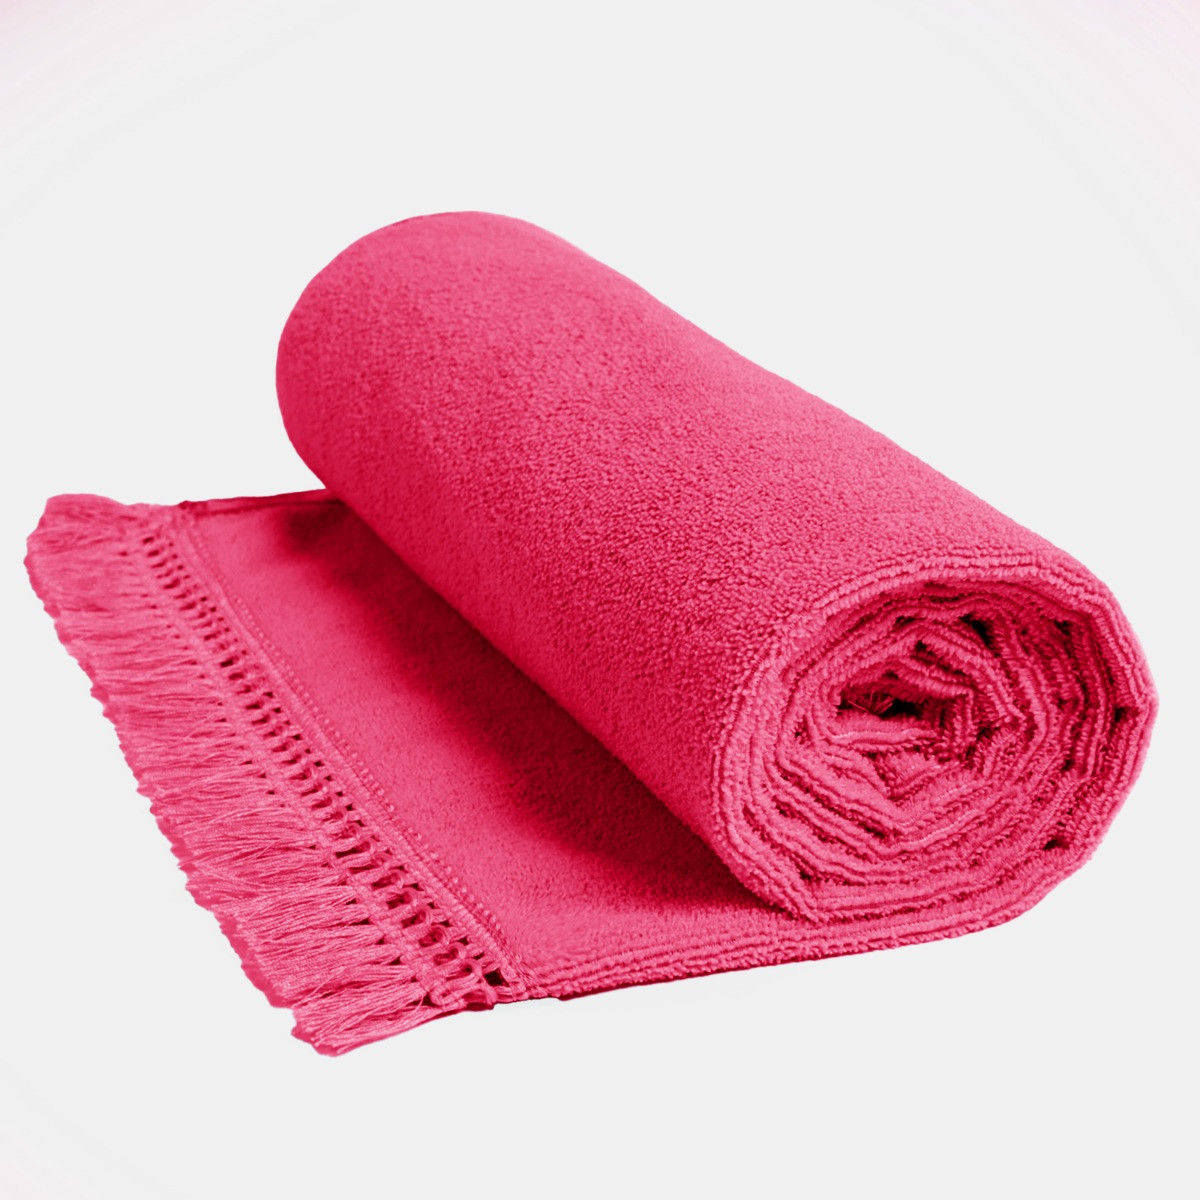 Sienna Tassel Beach Towel Bag - Fuchsia Pink>